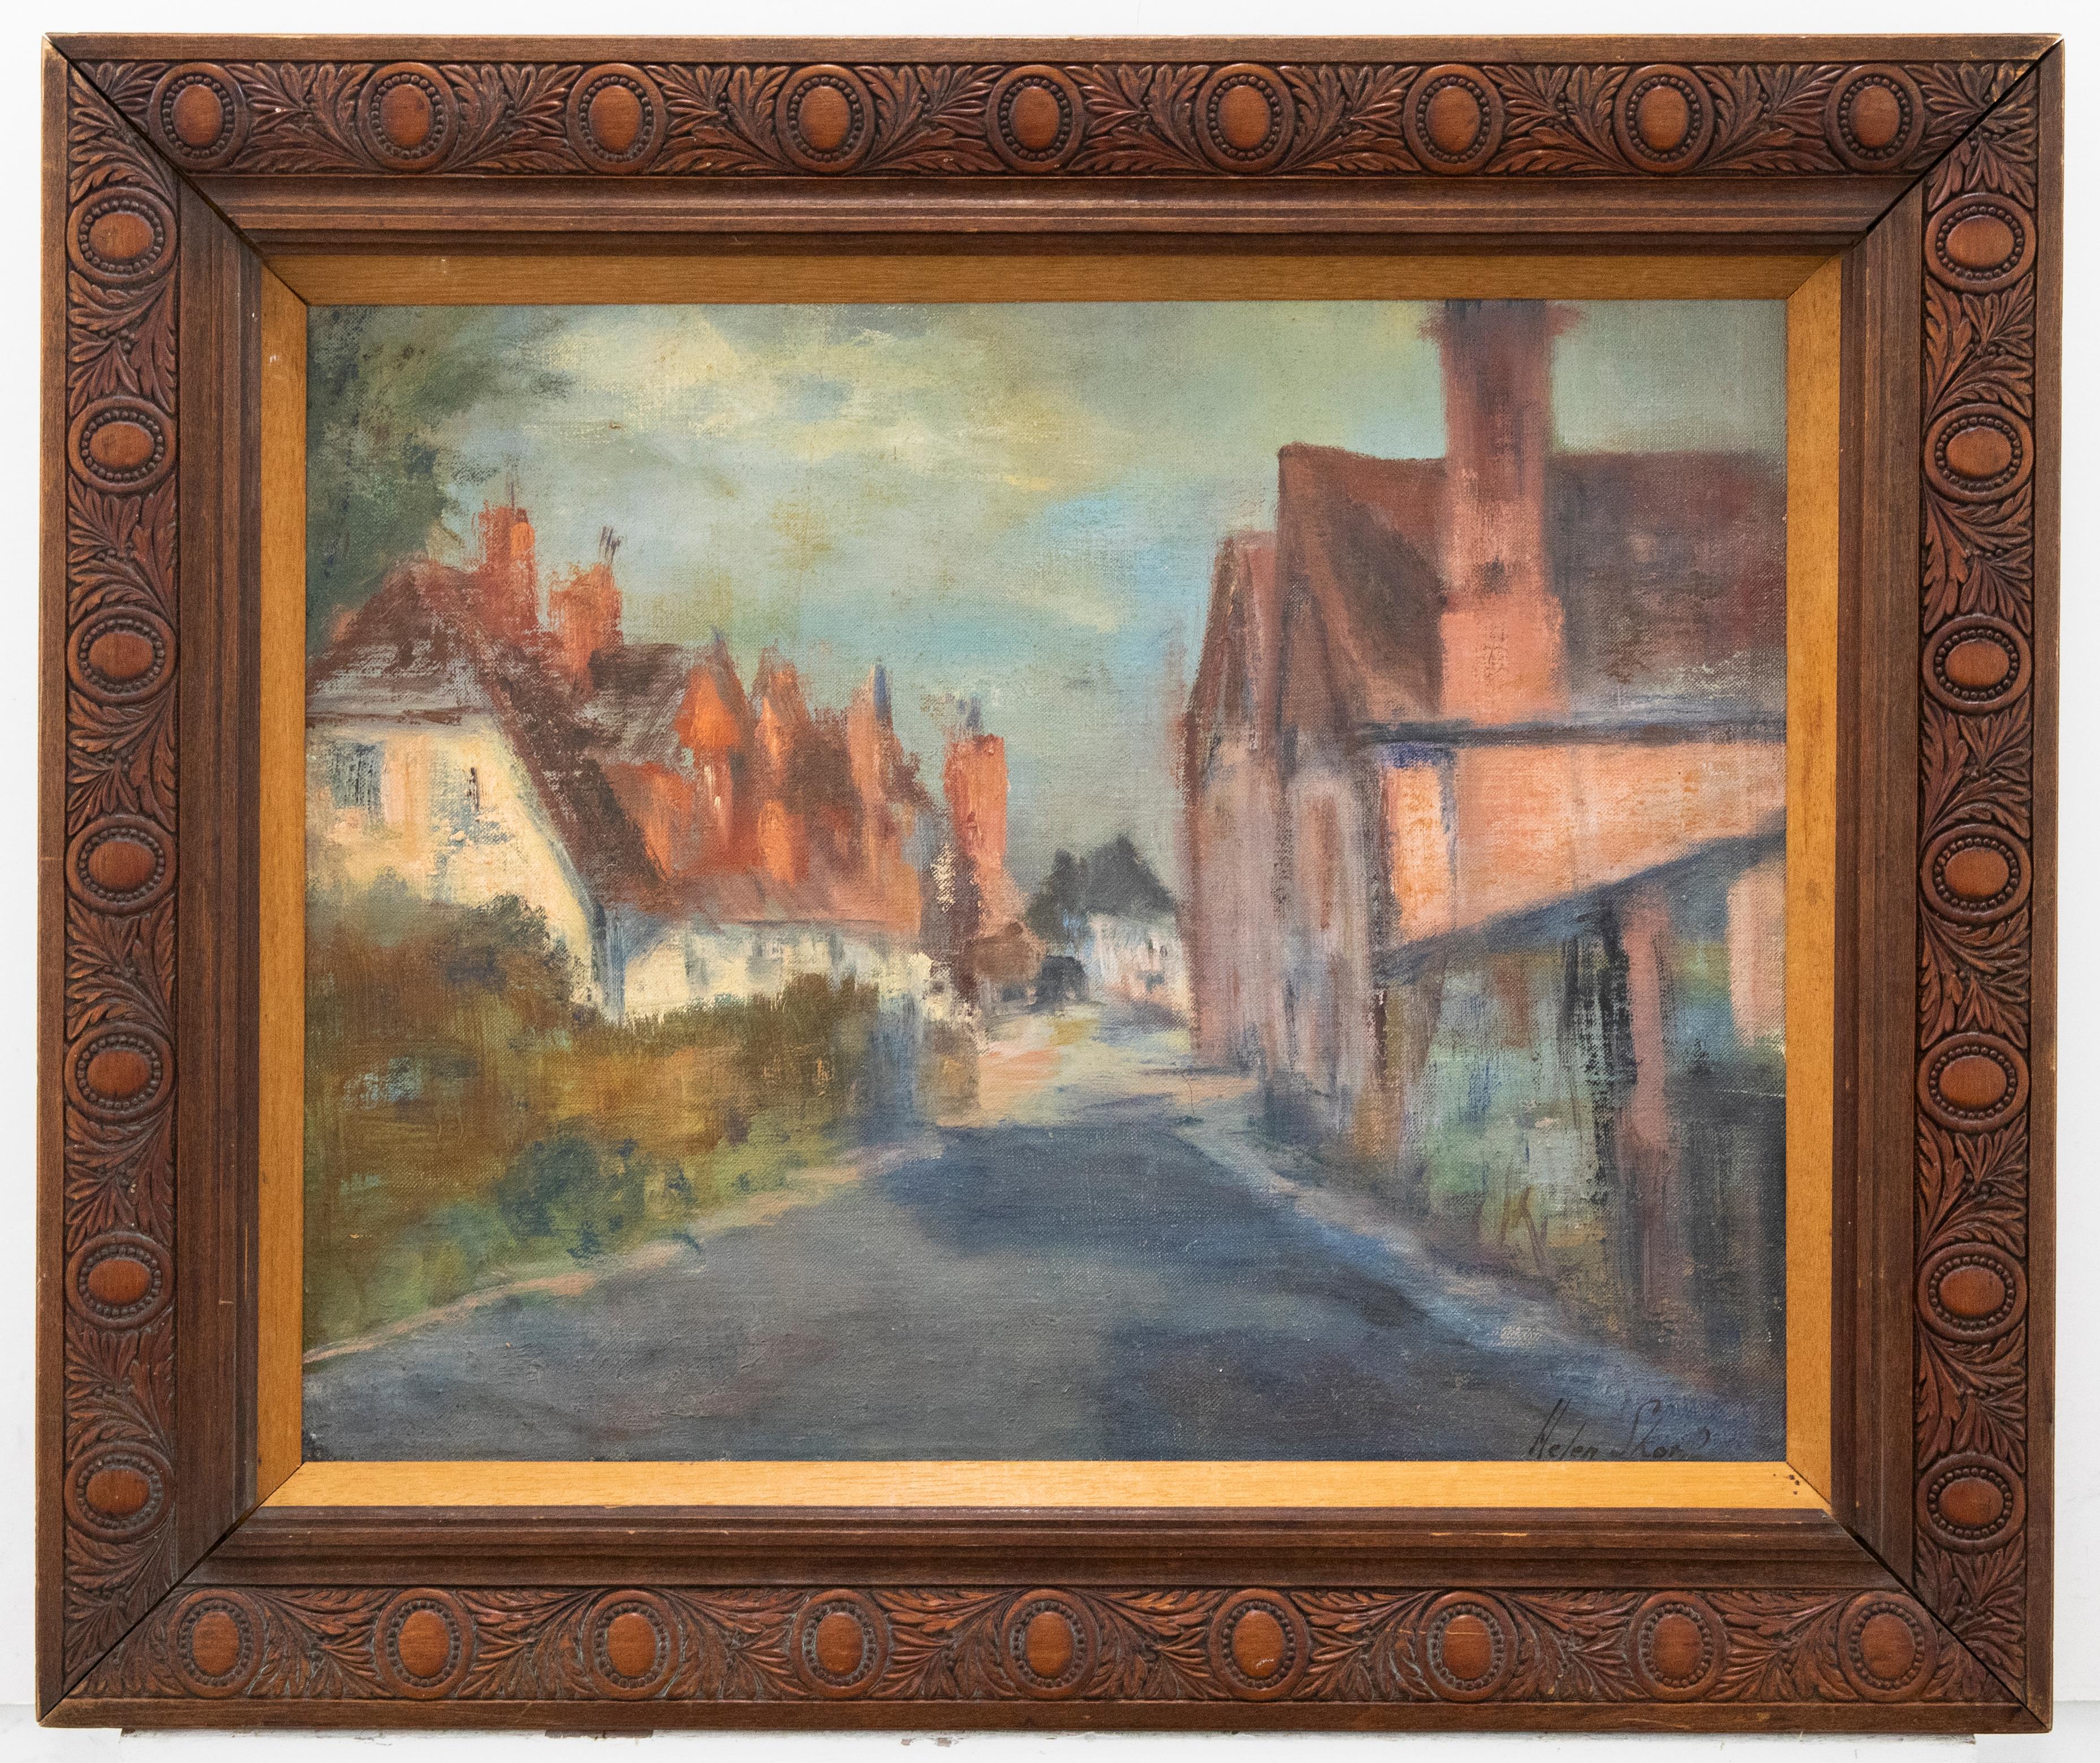 Helen Sharp - 20th Century Oil, Village Street - Painting by Helen Sharp Potter